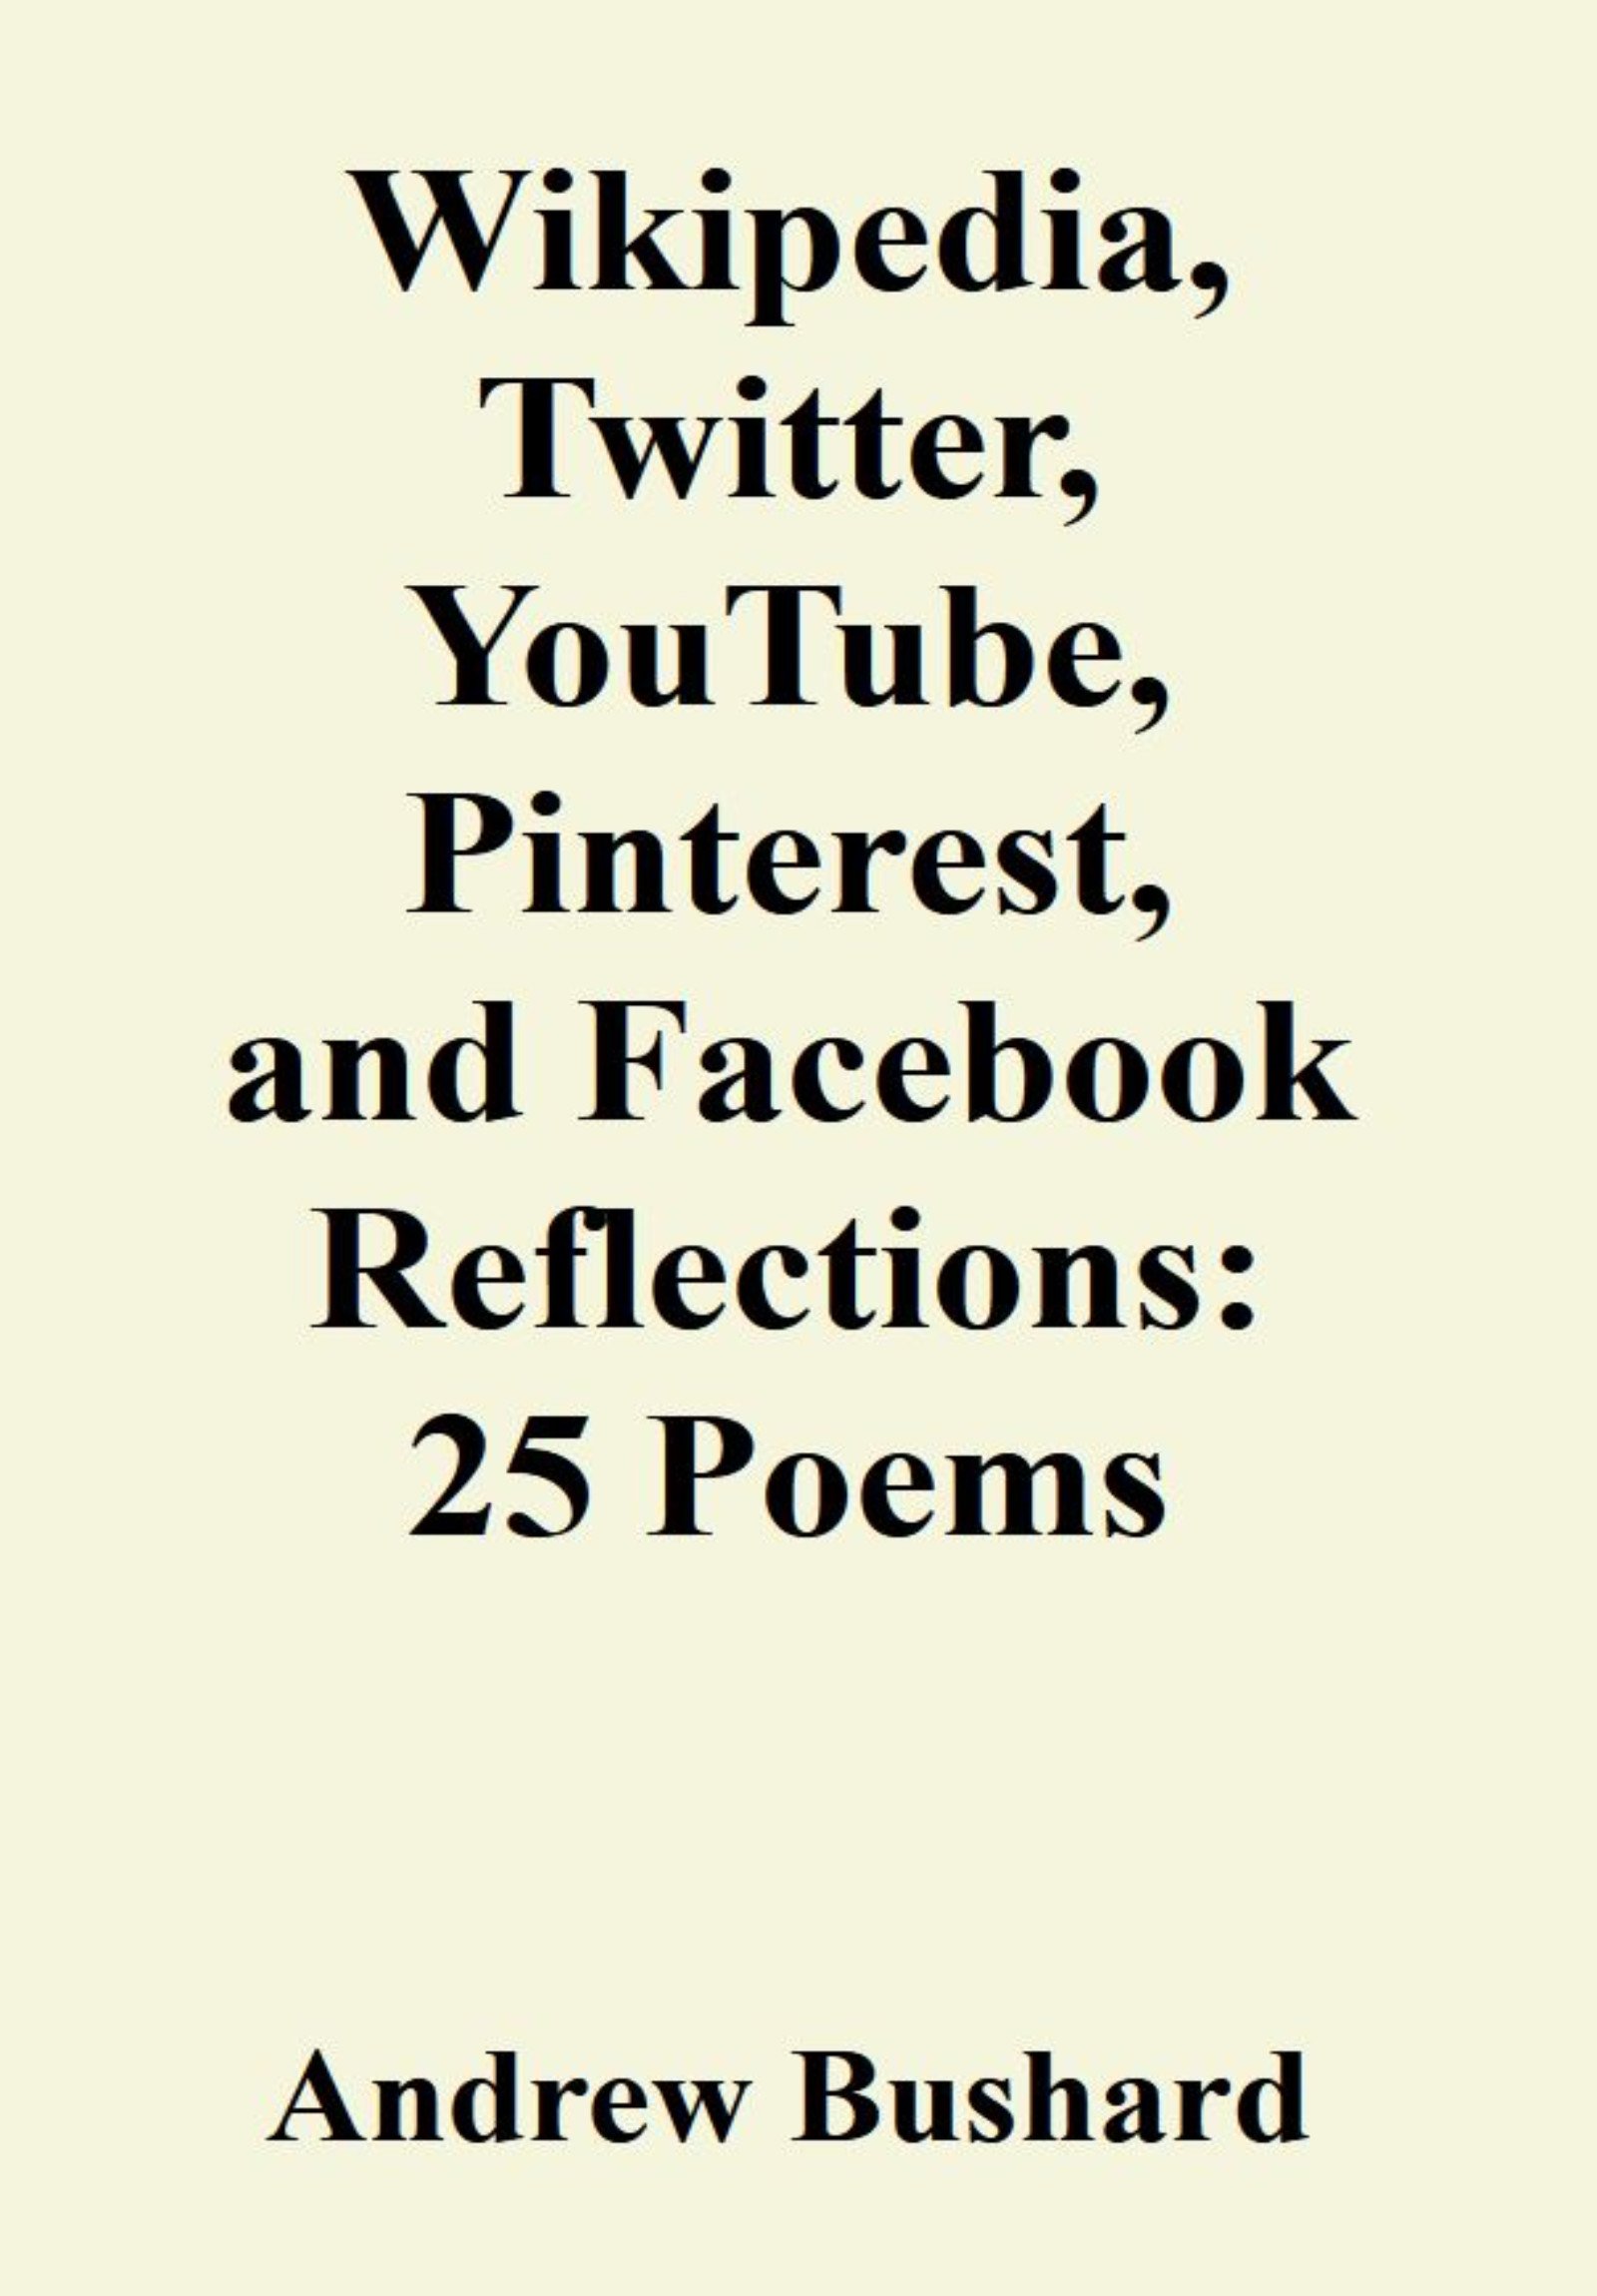 Wikipedia, Twitter, YouTube, Pinterest, Facebook